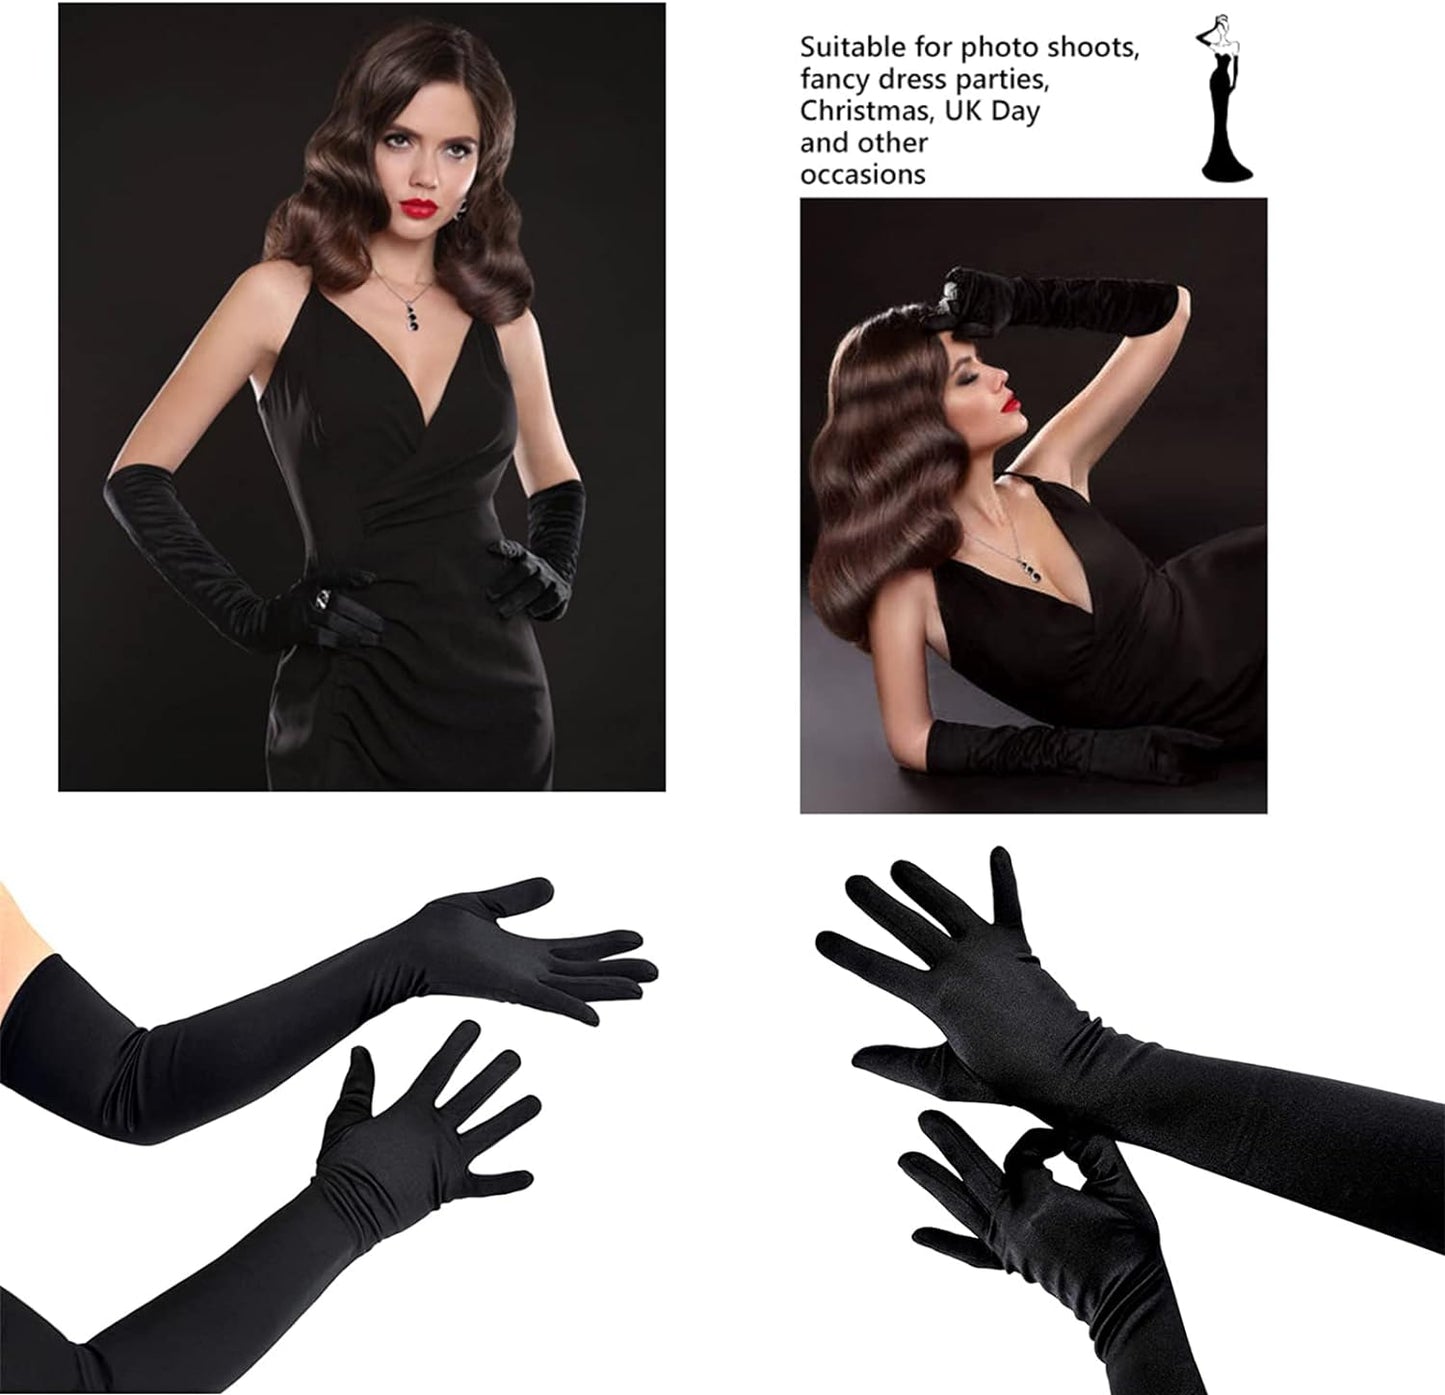 Elegant Long Black Satin Gloves for Women - Formal Wedding & Fancy Dress Accessories - Glamorous and Comfortable